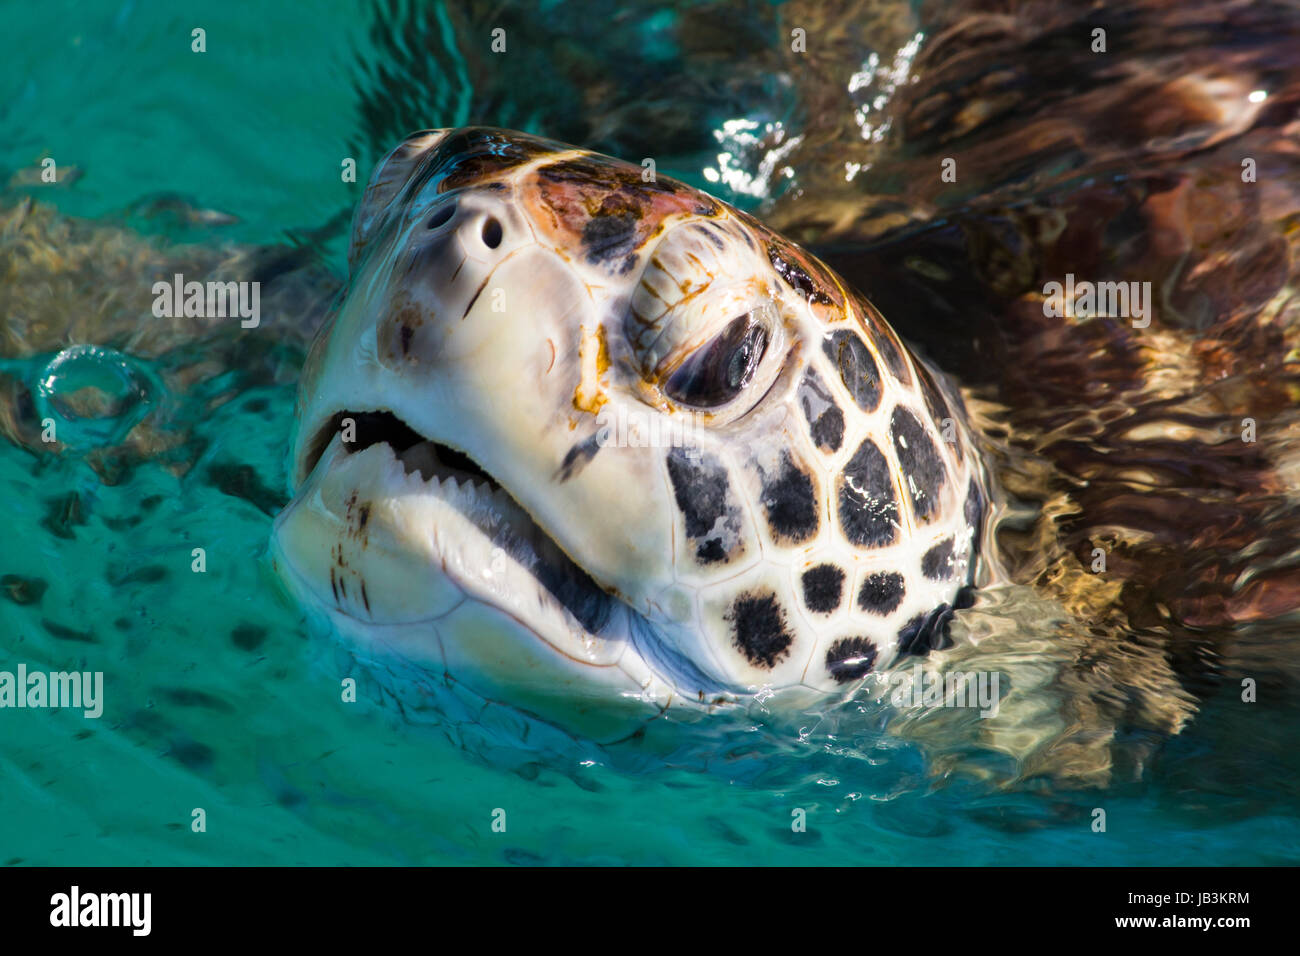 Grüne Schildkröte Kopf hob zu atmen Stockfoto